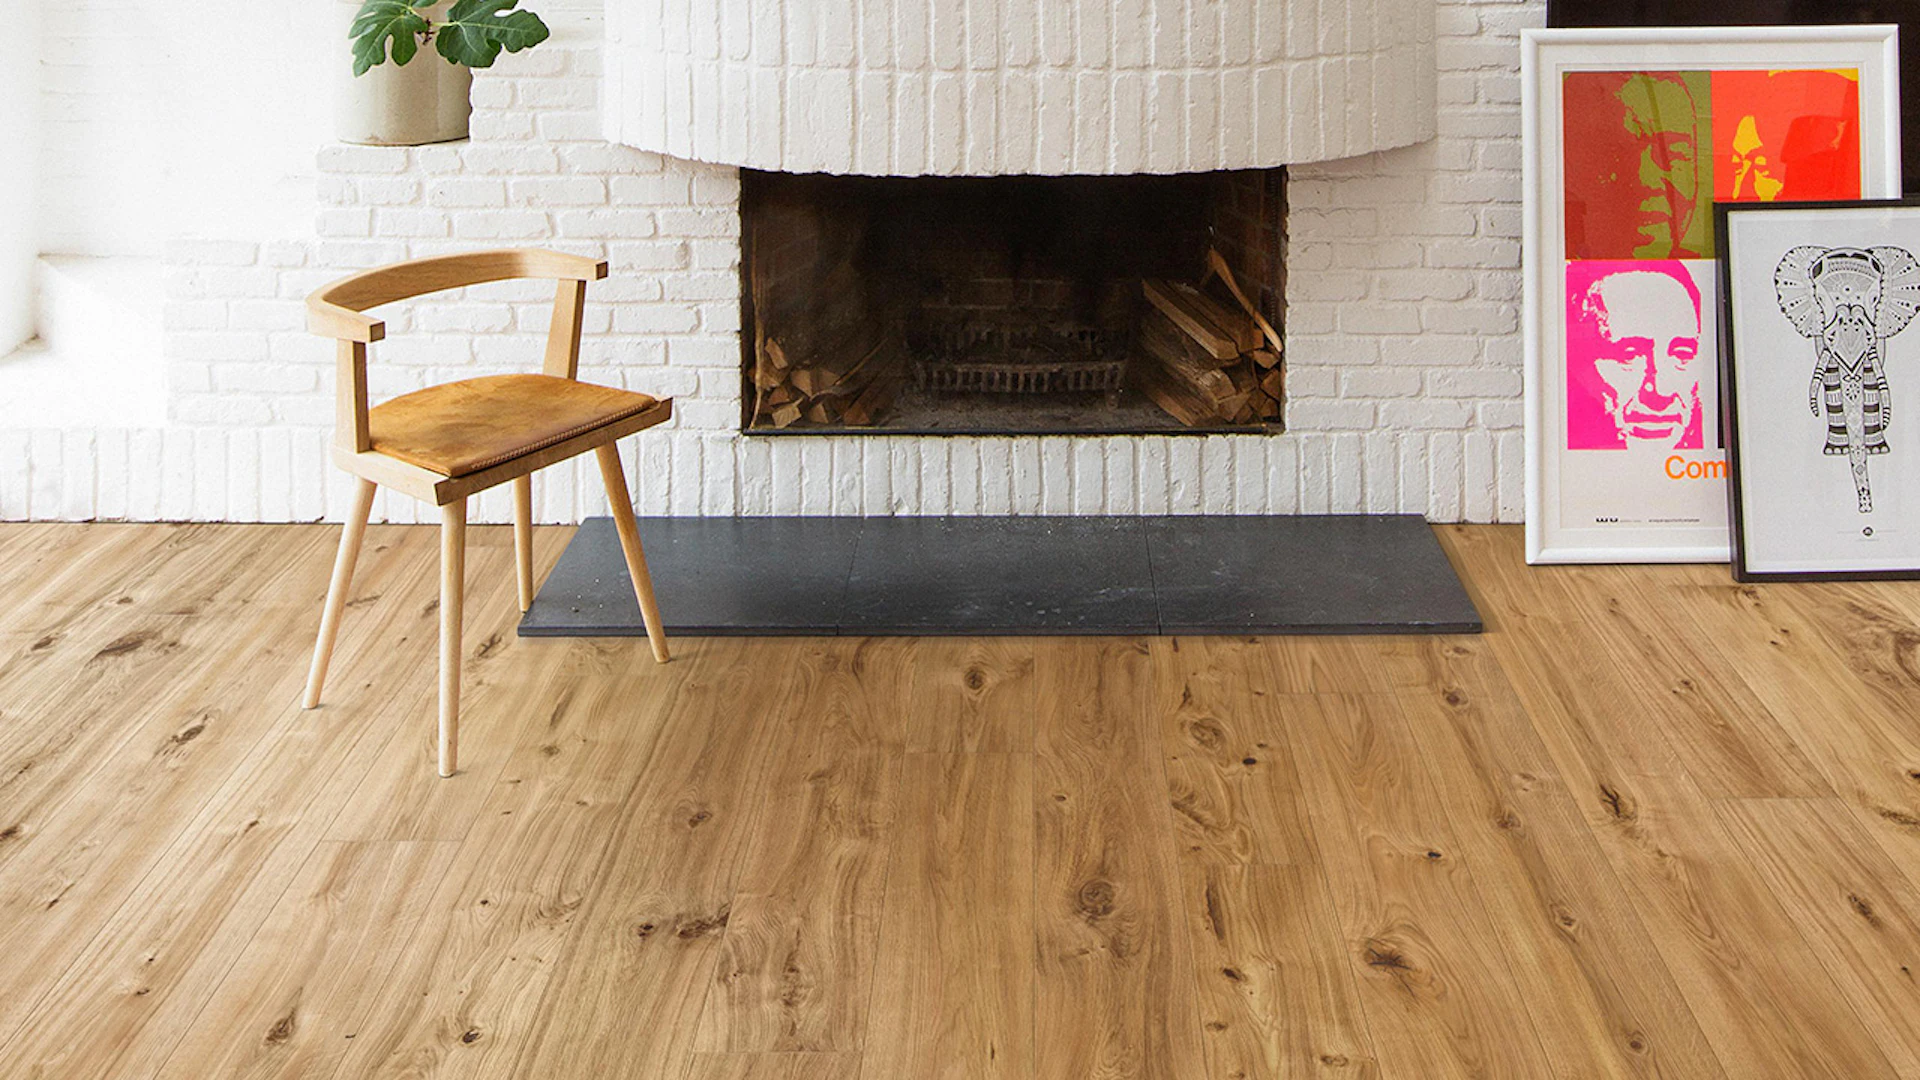 Kährs Parquet Flooring - Smaland Collection Oak Vedbo (151NCSEK01KW240)